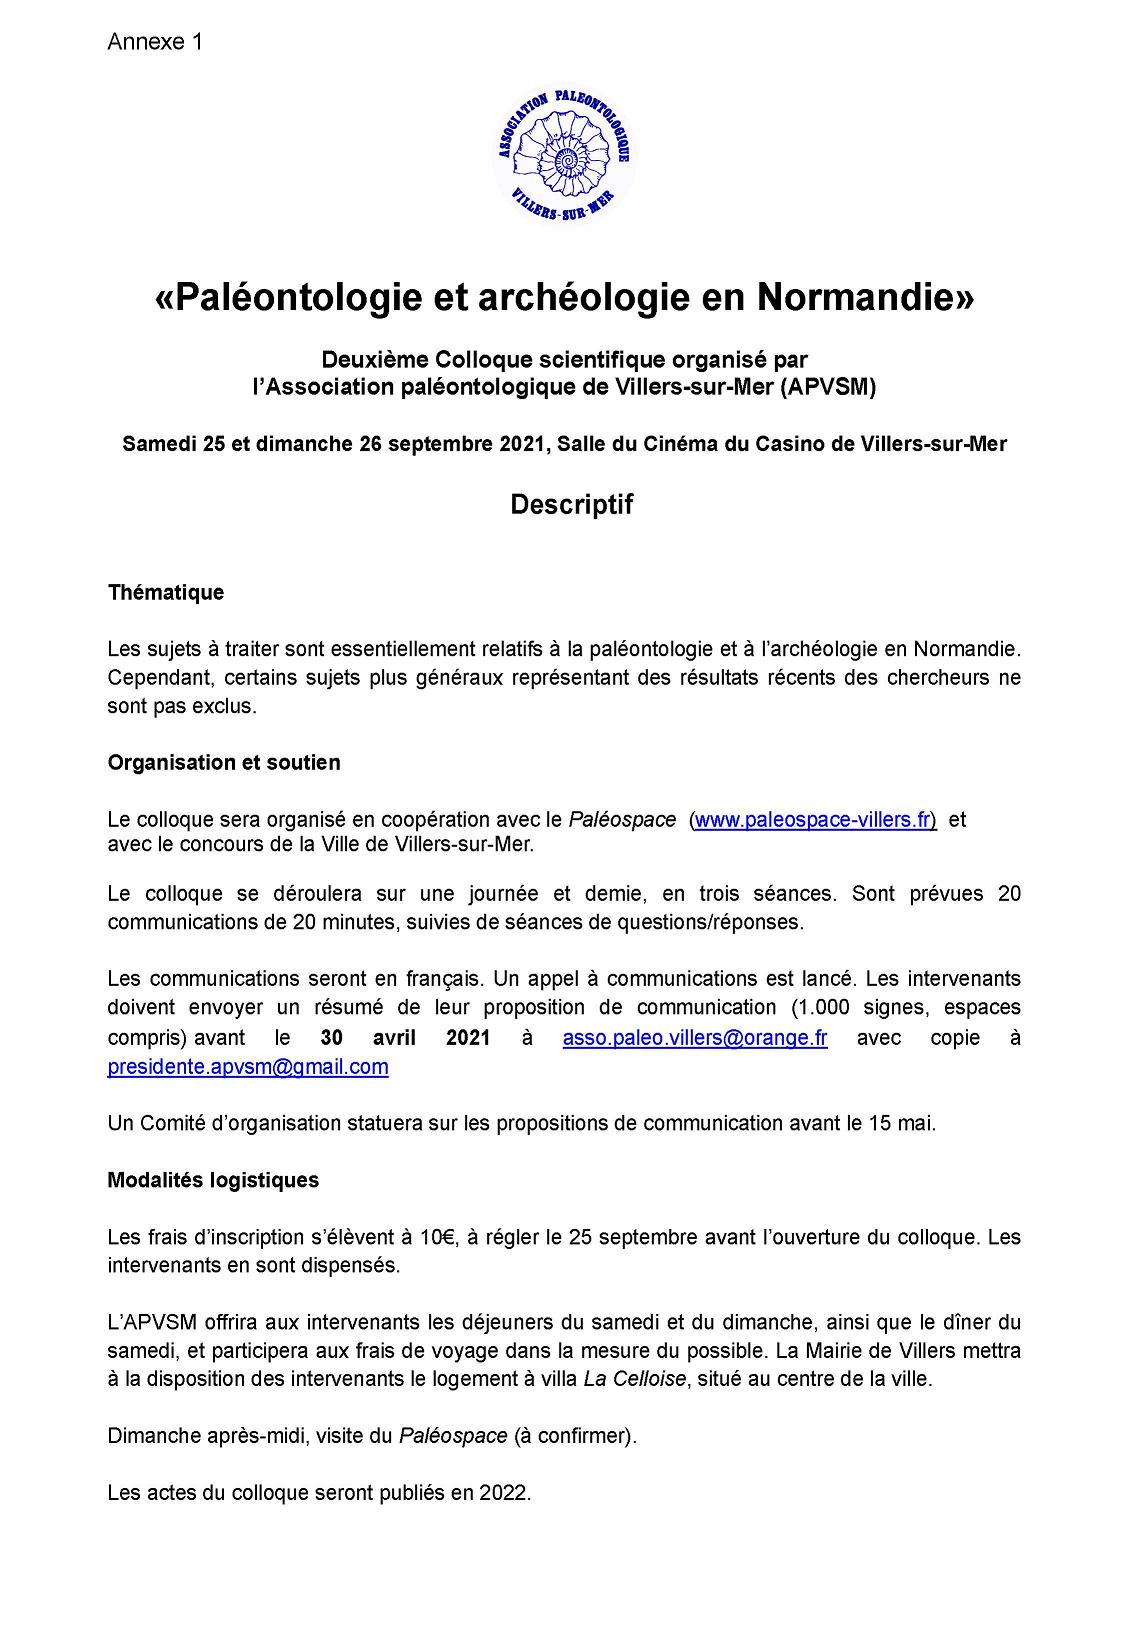 202109_villers_paleontologie_annonce